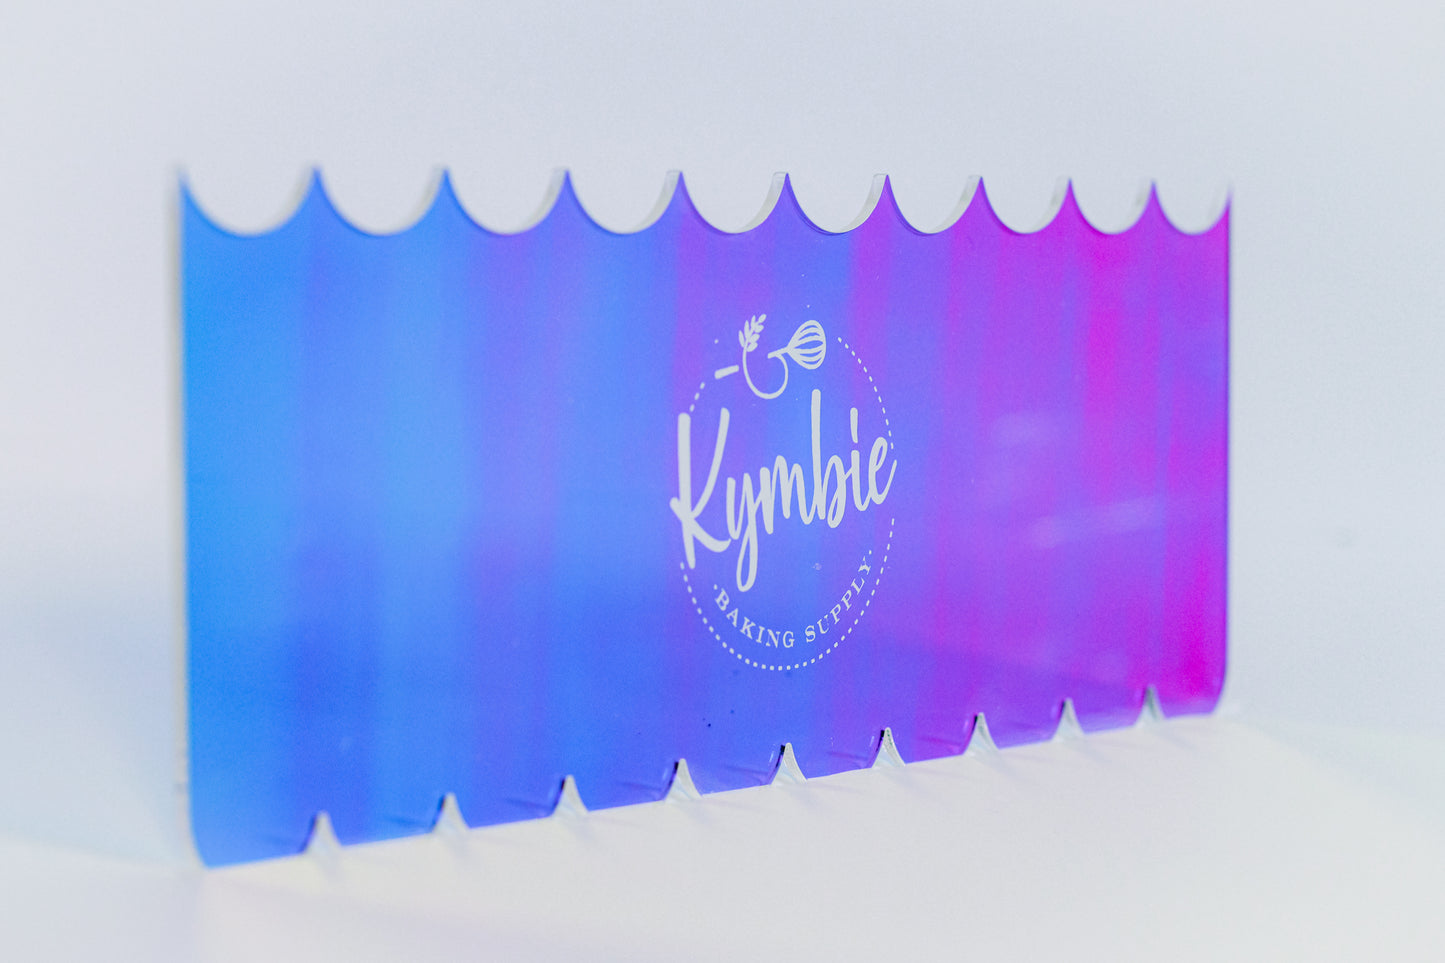 Kymbie® 3 Piece Iridescent Acrylic Cake Disc and Scraper Set